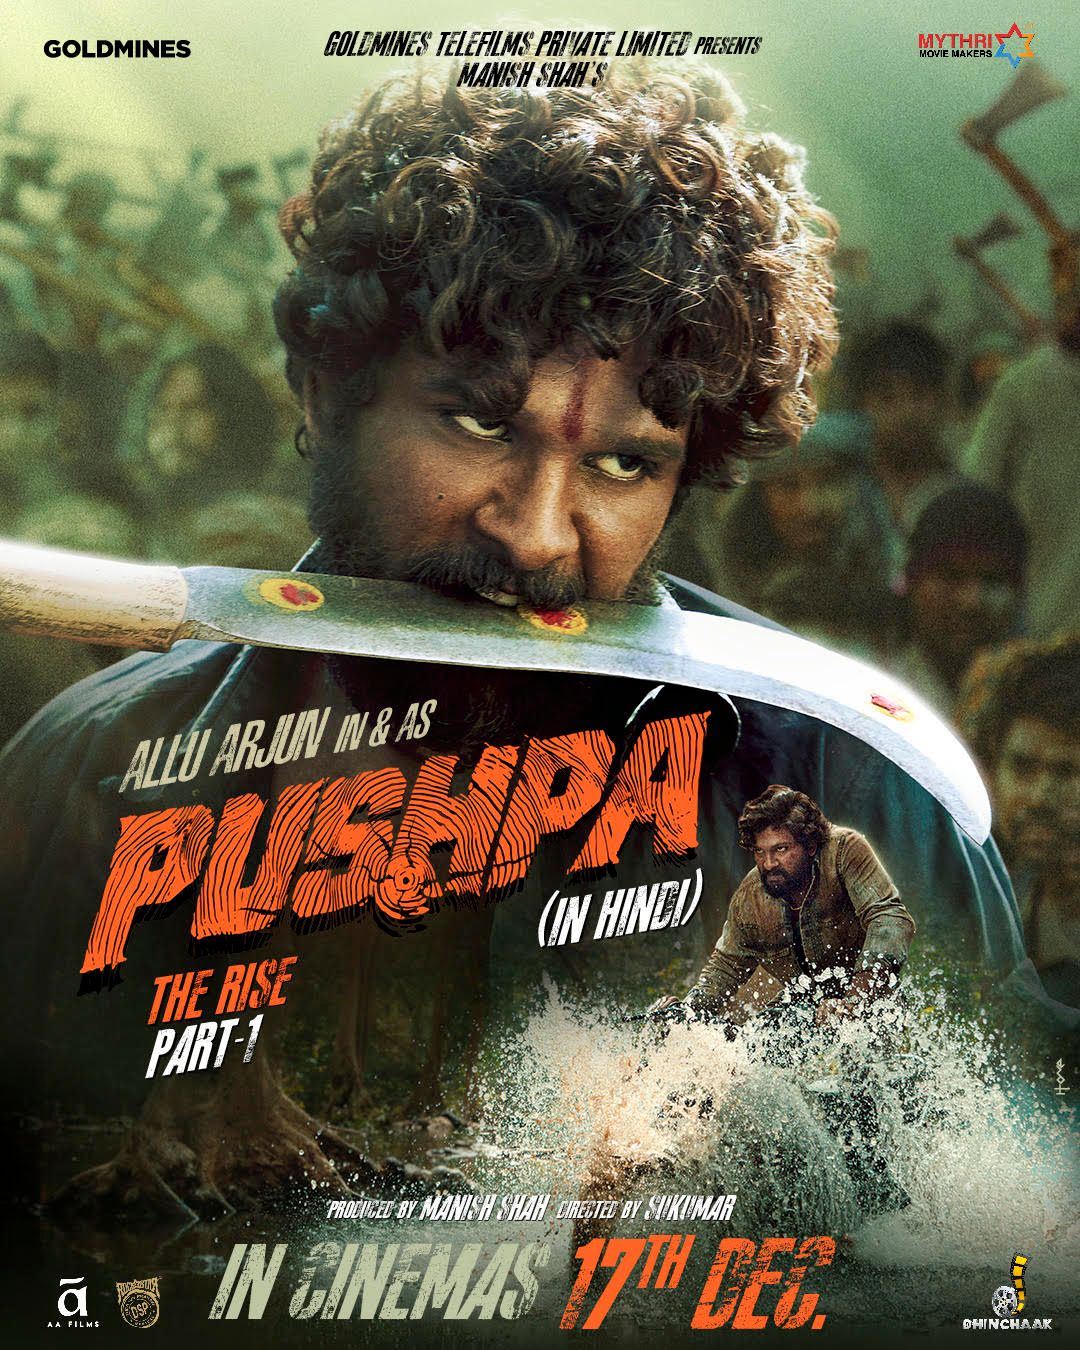 Pushpa: The Rise - Part 1 2021